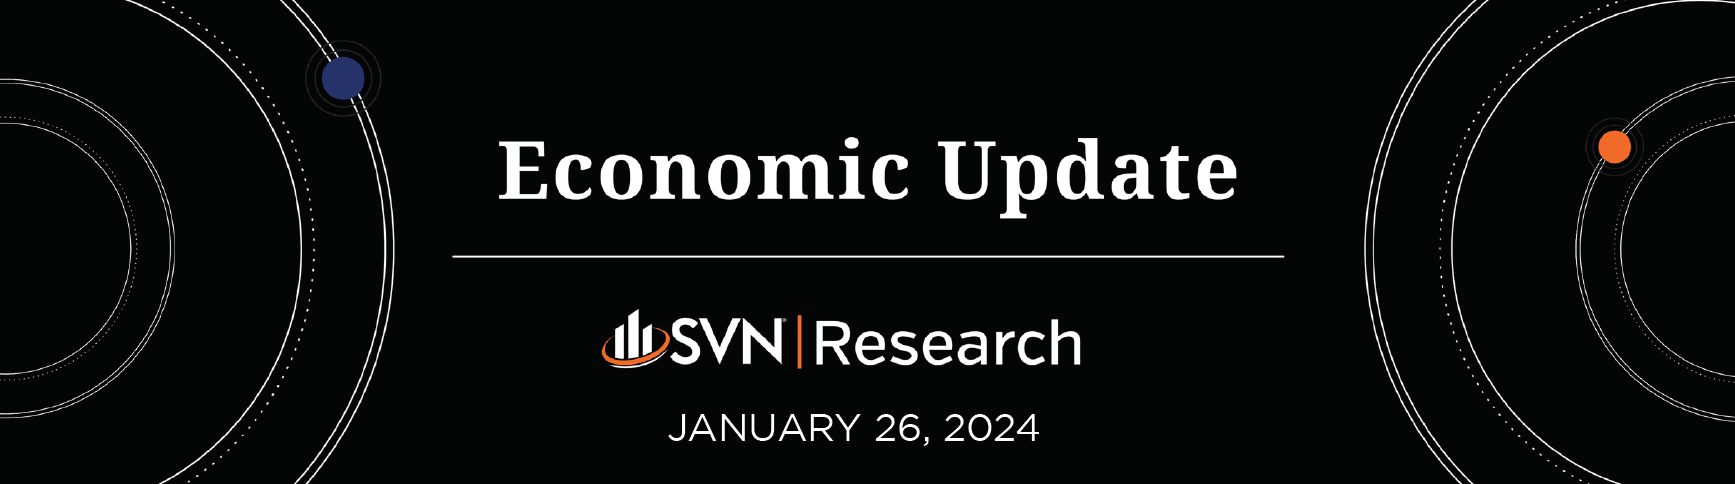 SVN | Research Economic Update 01.26.2024